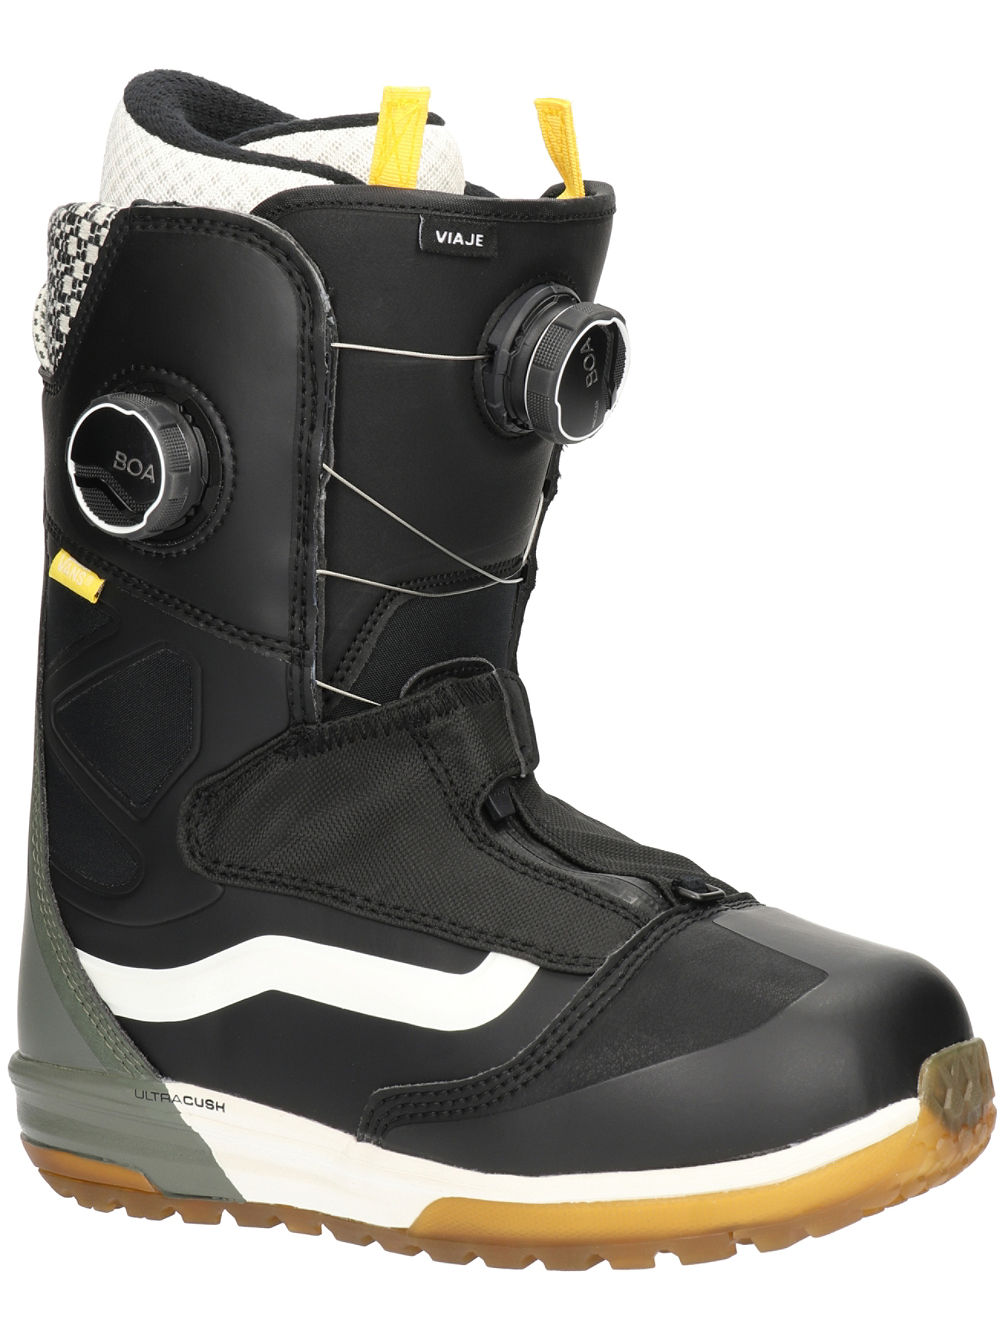 Viaje Snowboard Boots